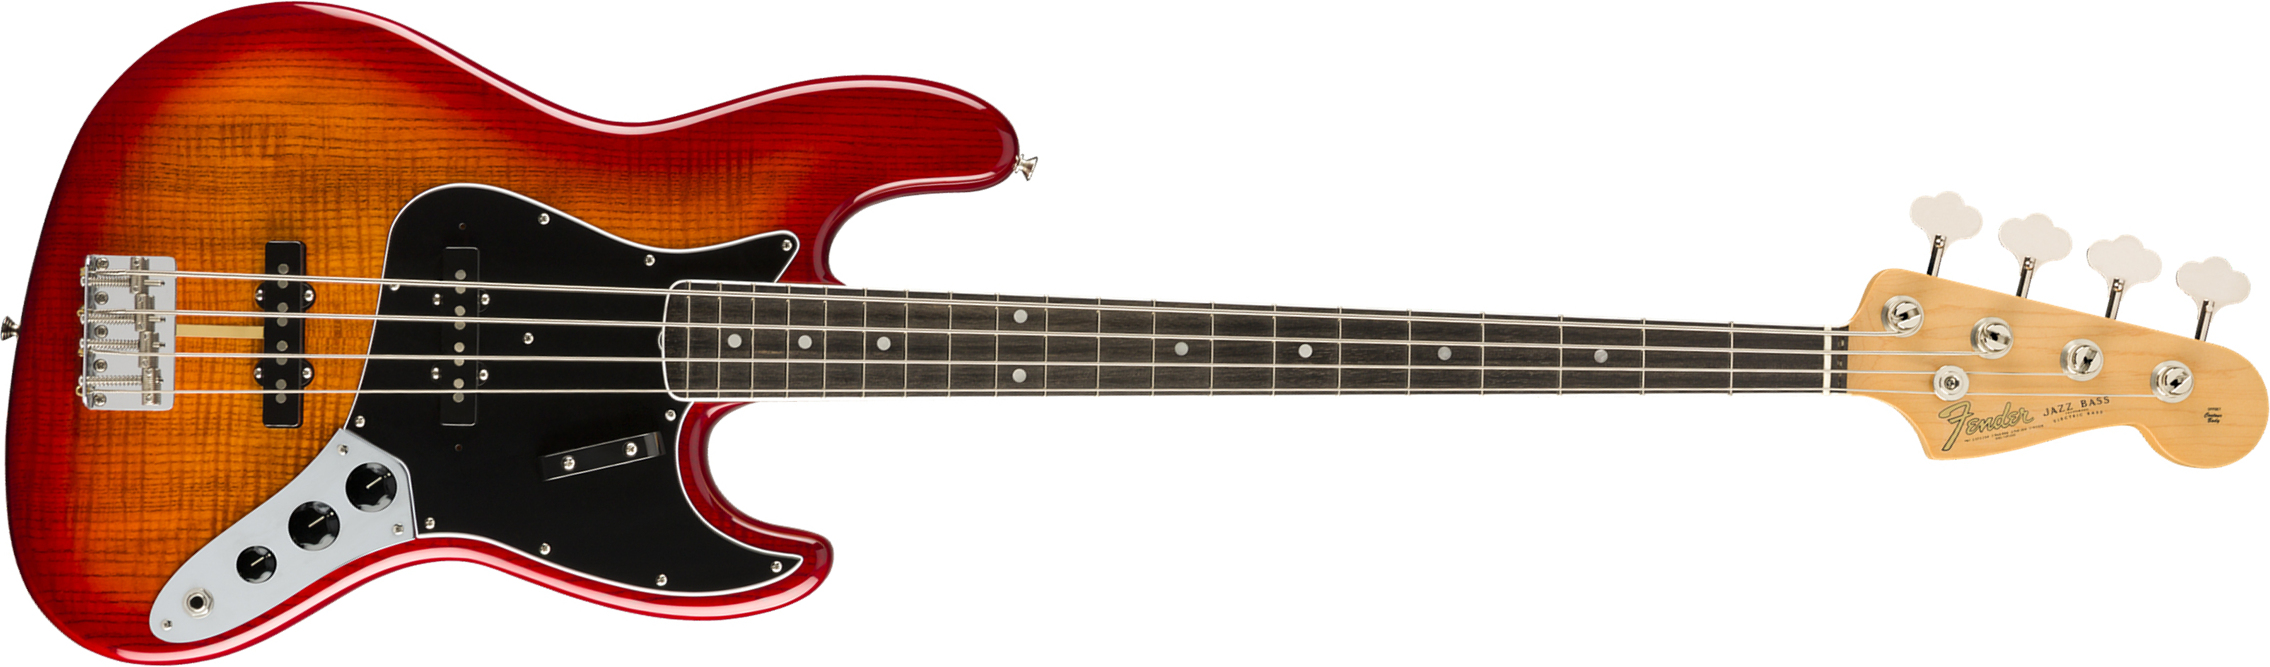 Fender Jazz Bass Flame Ash Top Rarities Usa Eb - Plasma Red Burst - Solidbody E-bass - Main picture